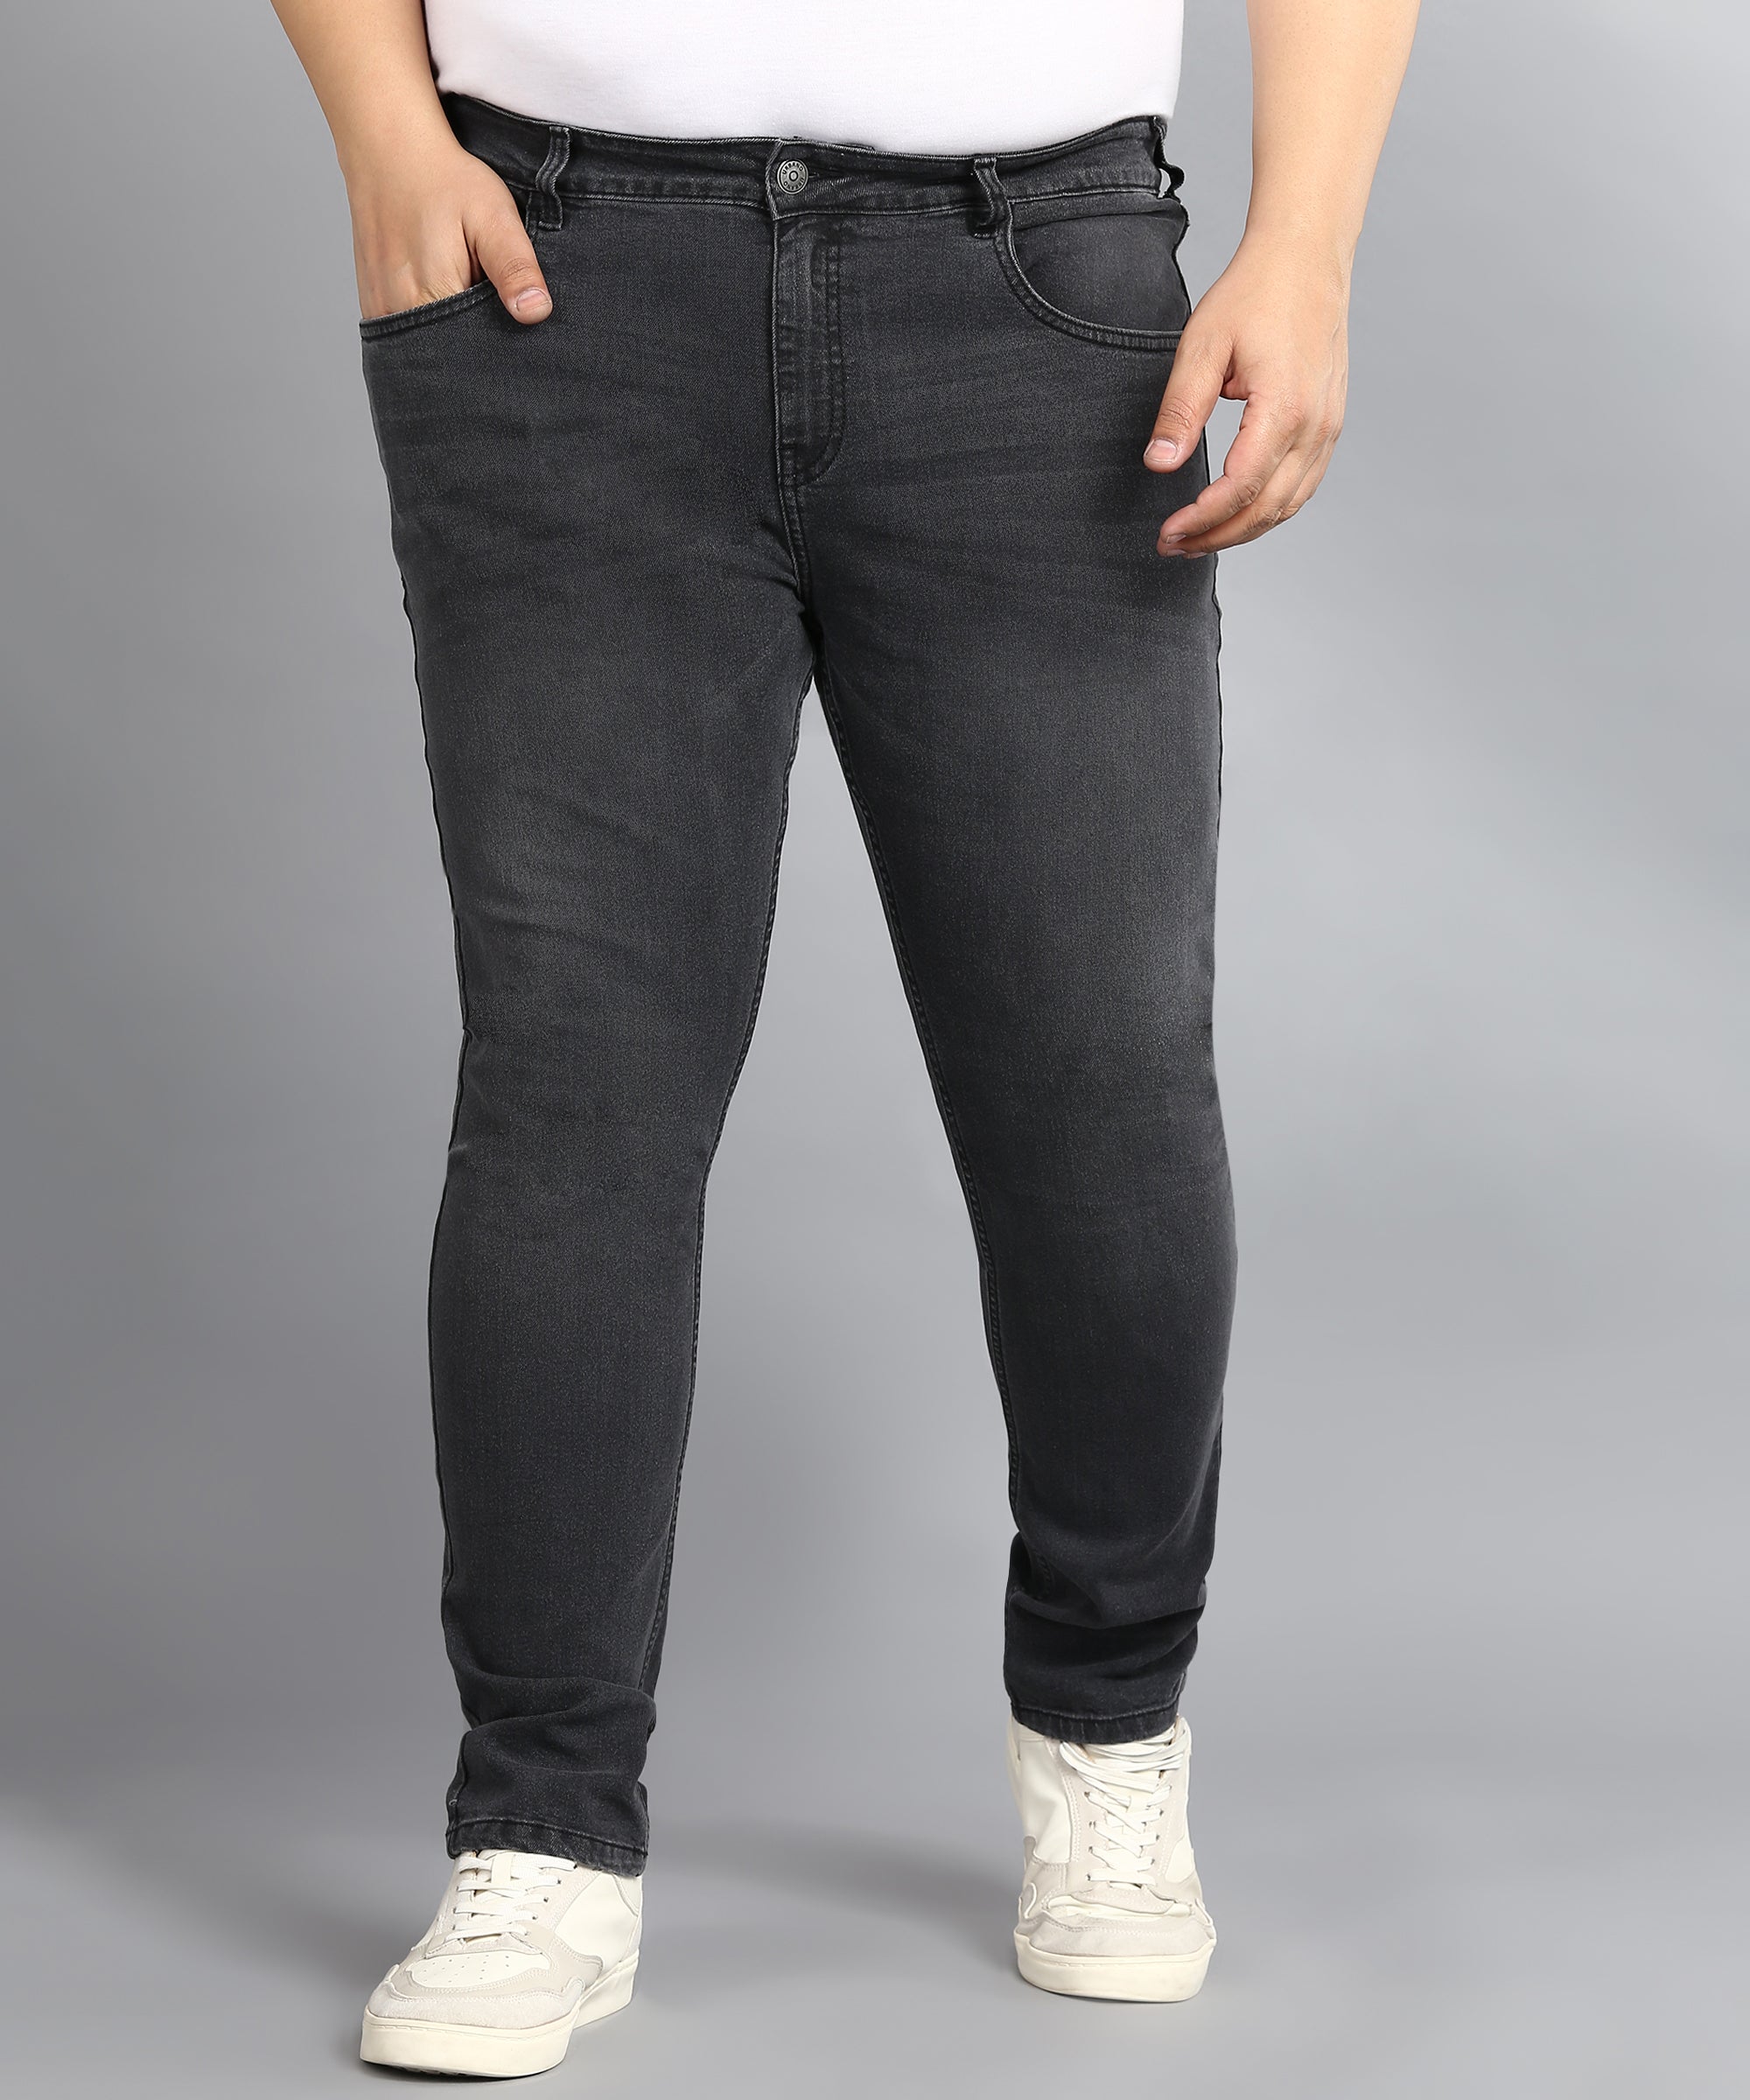 Plus Men's Carbon Grey Regular Fit Washed Jeans Stretchable